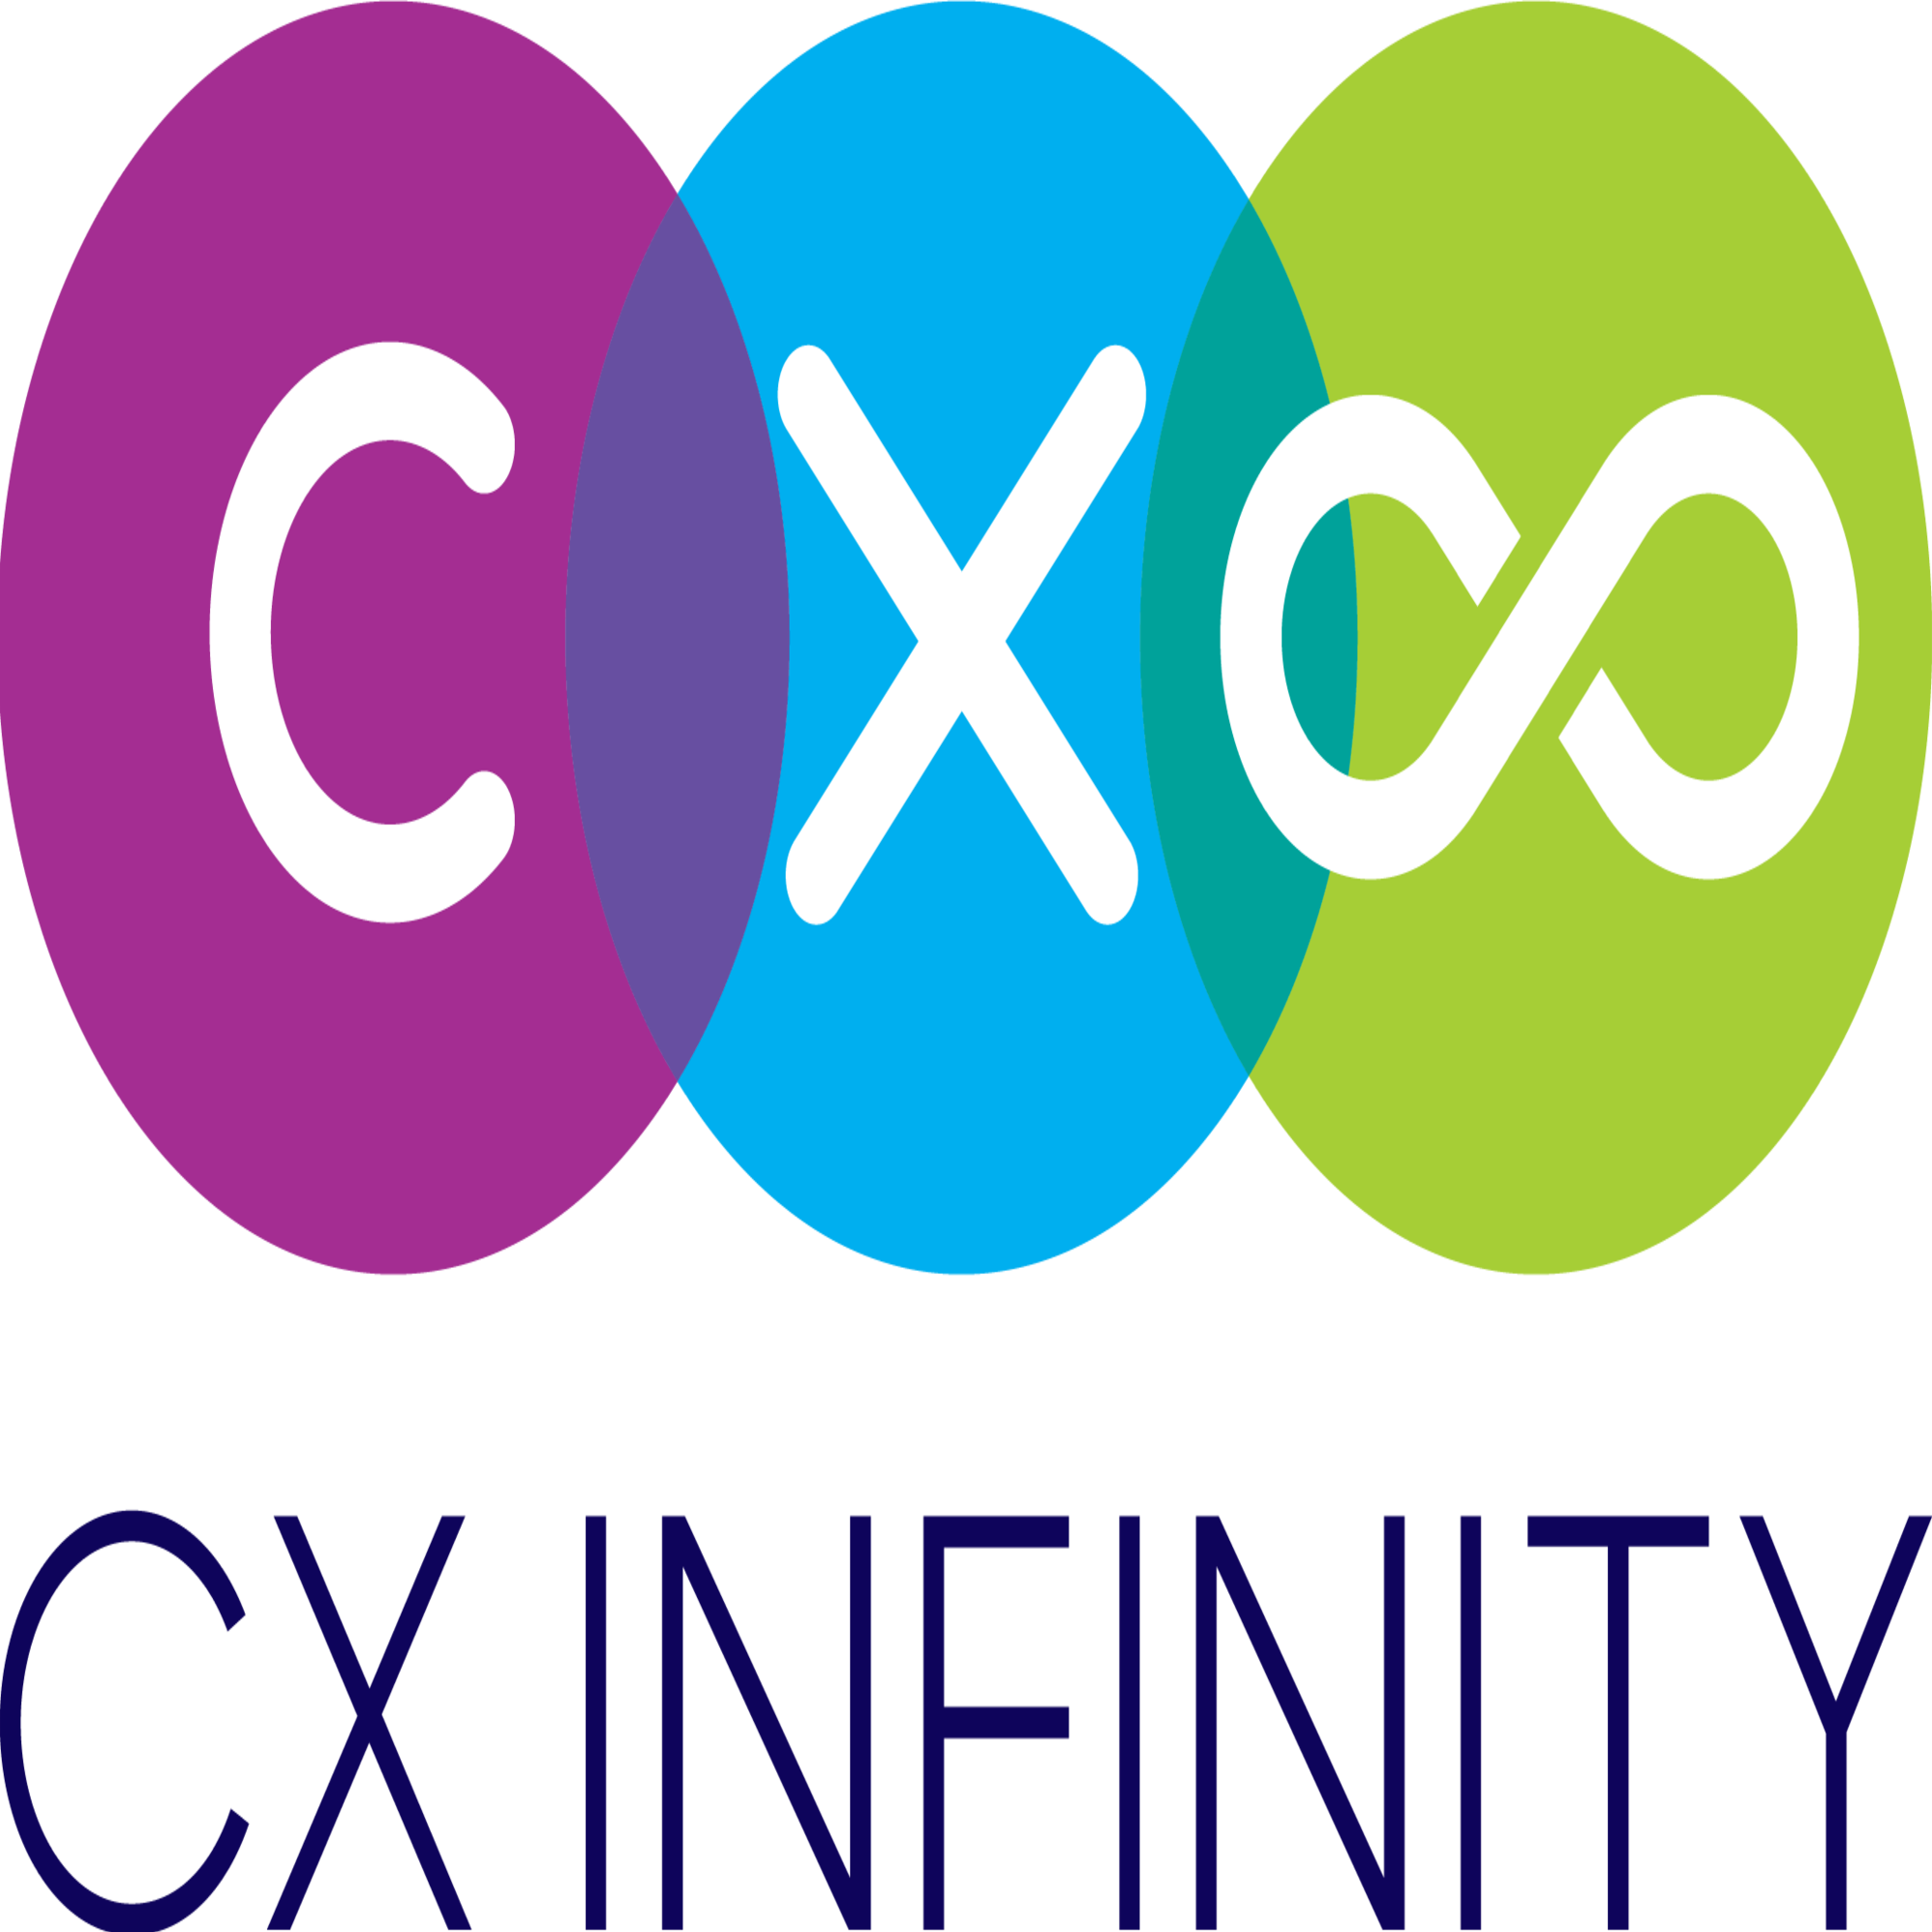 CXInfnity